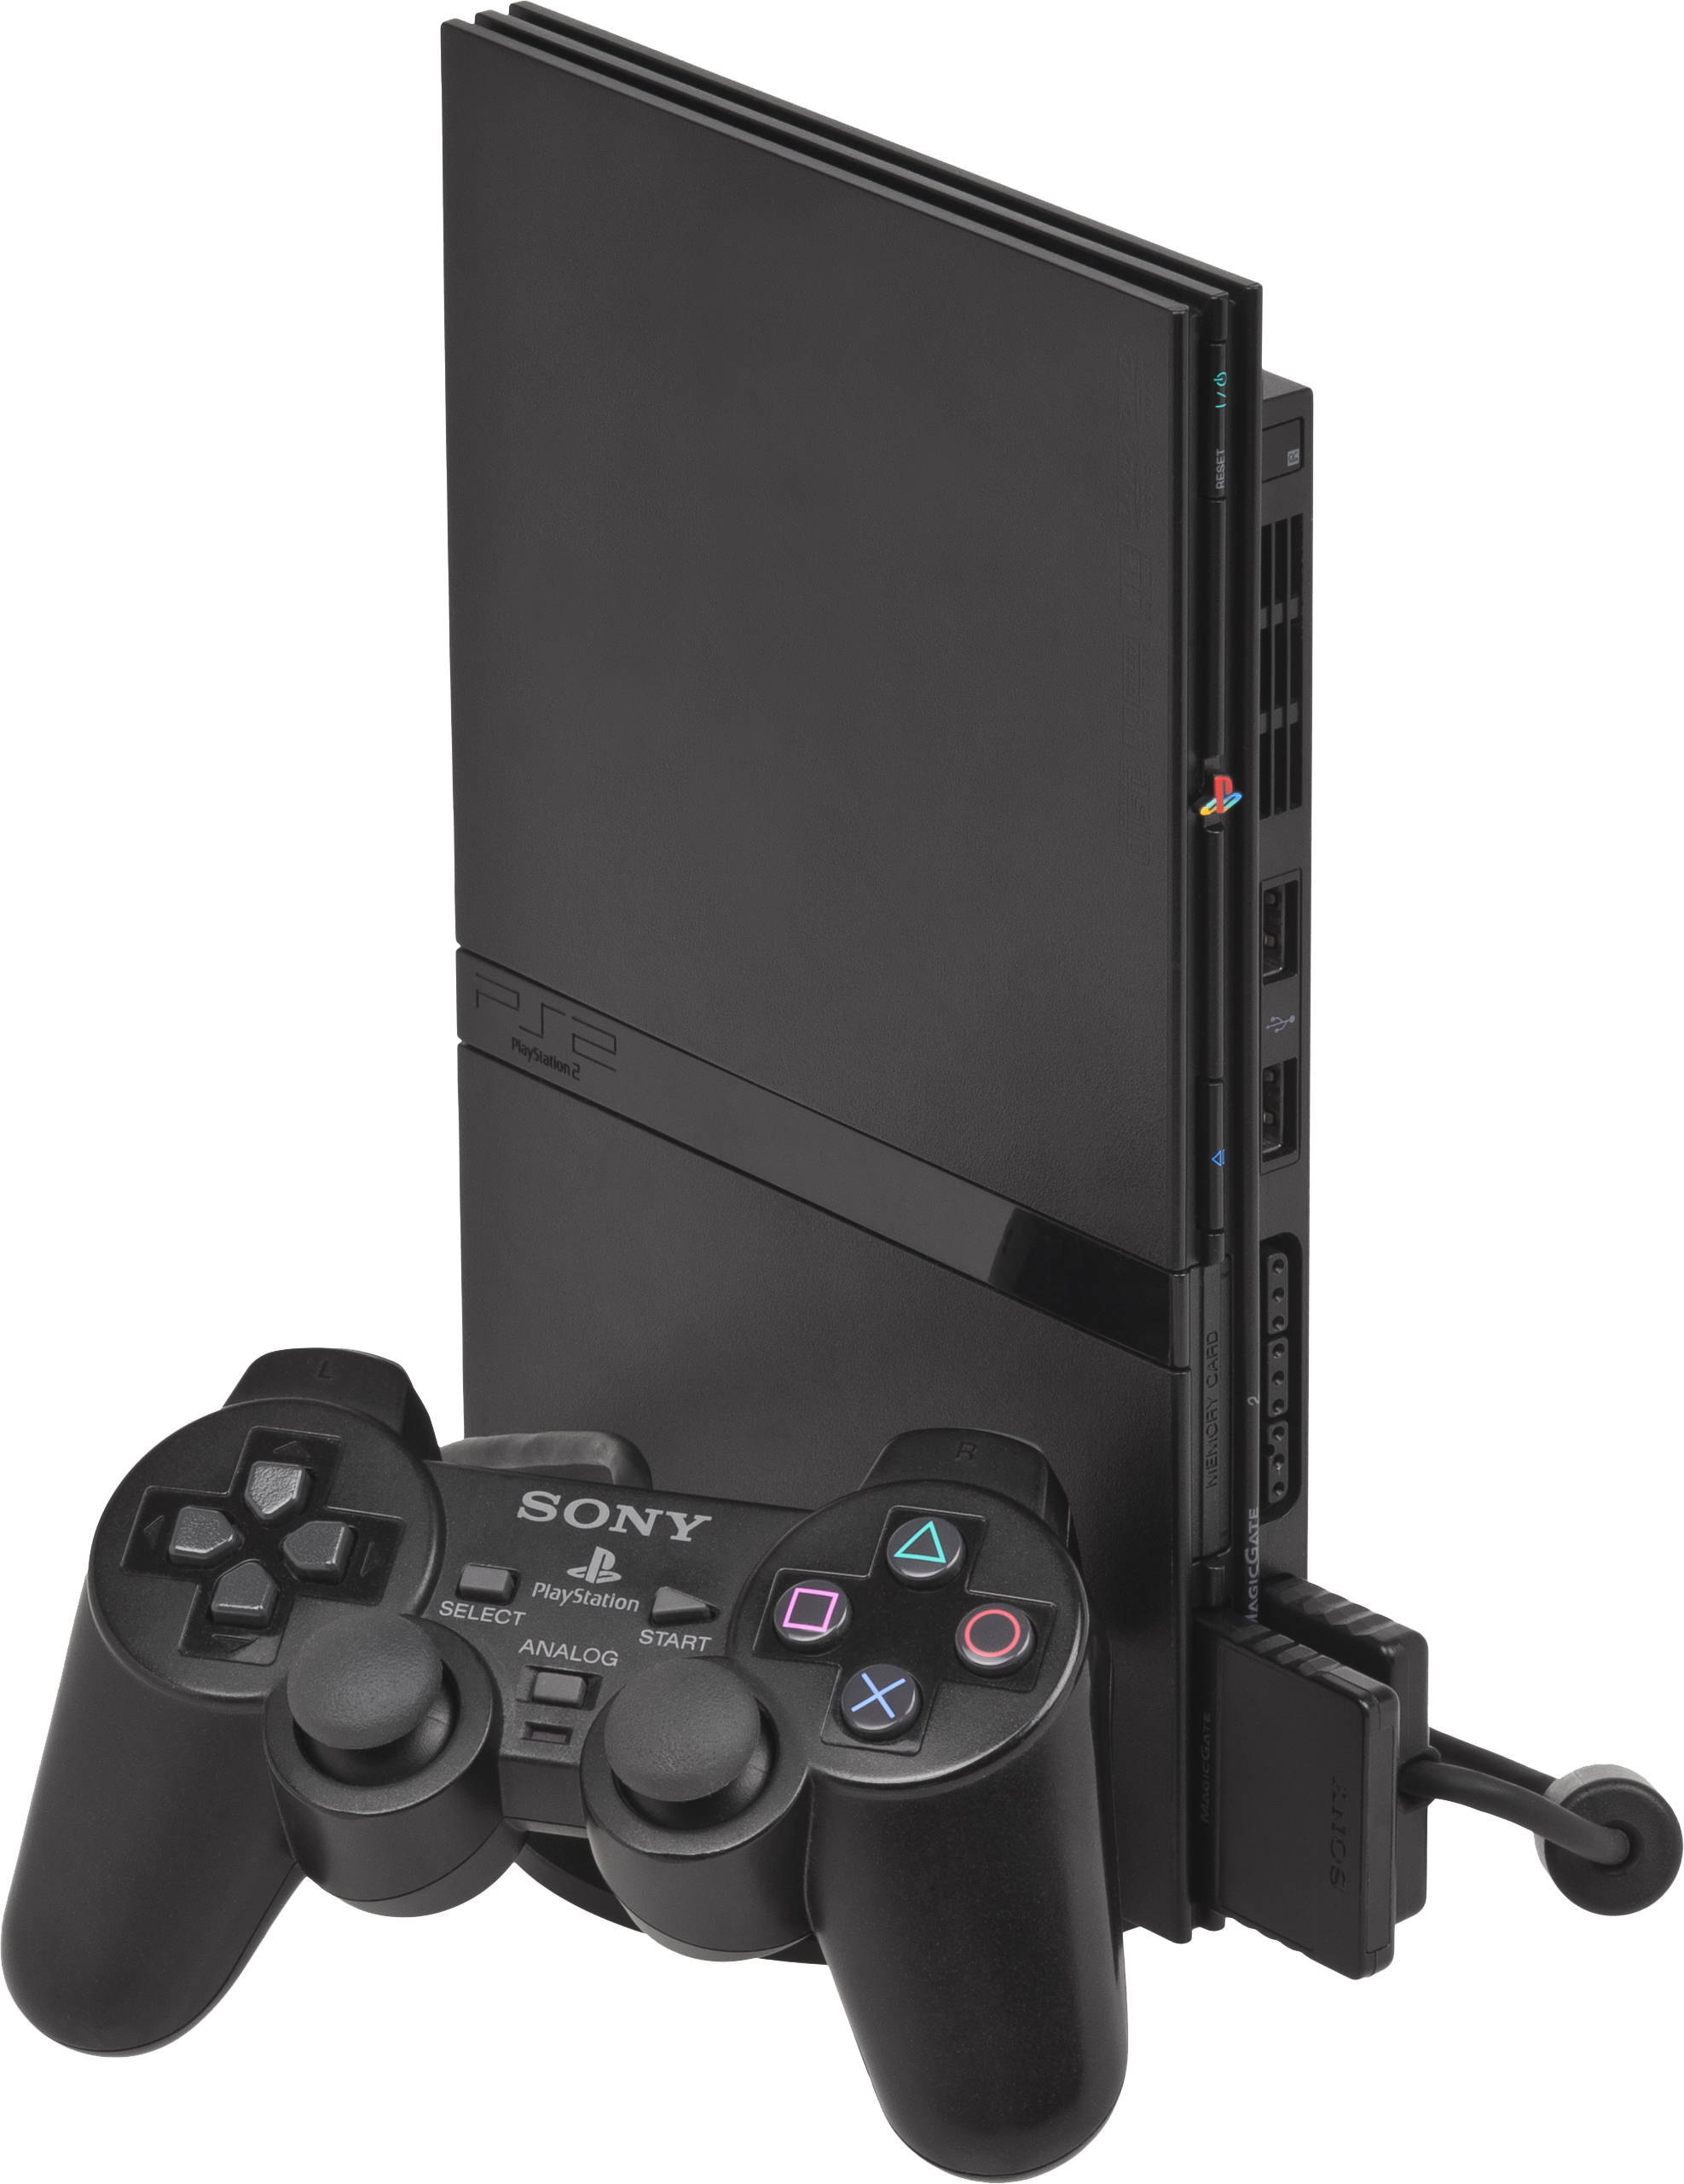 PlayStation Multitap - Wikipedia